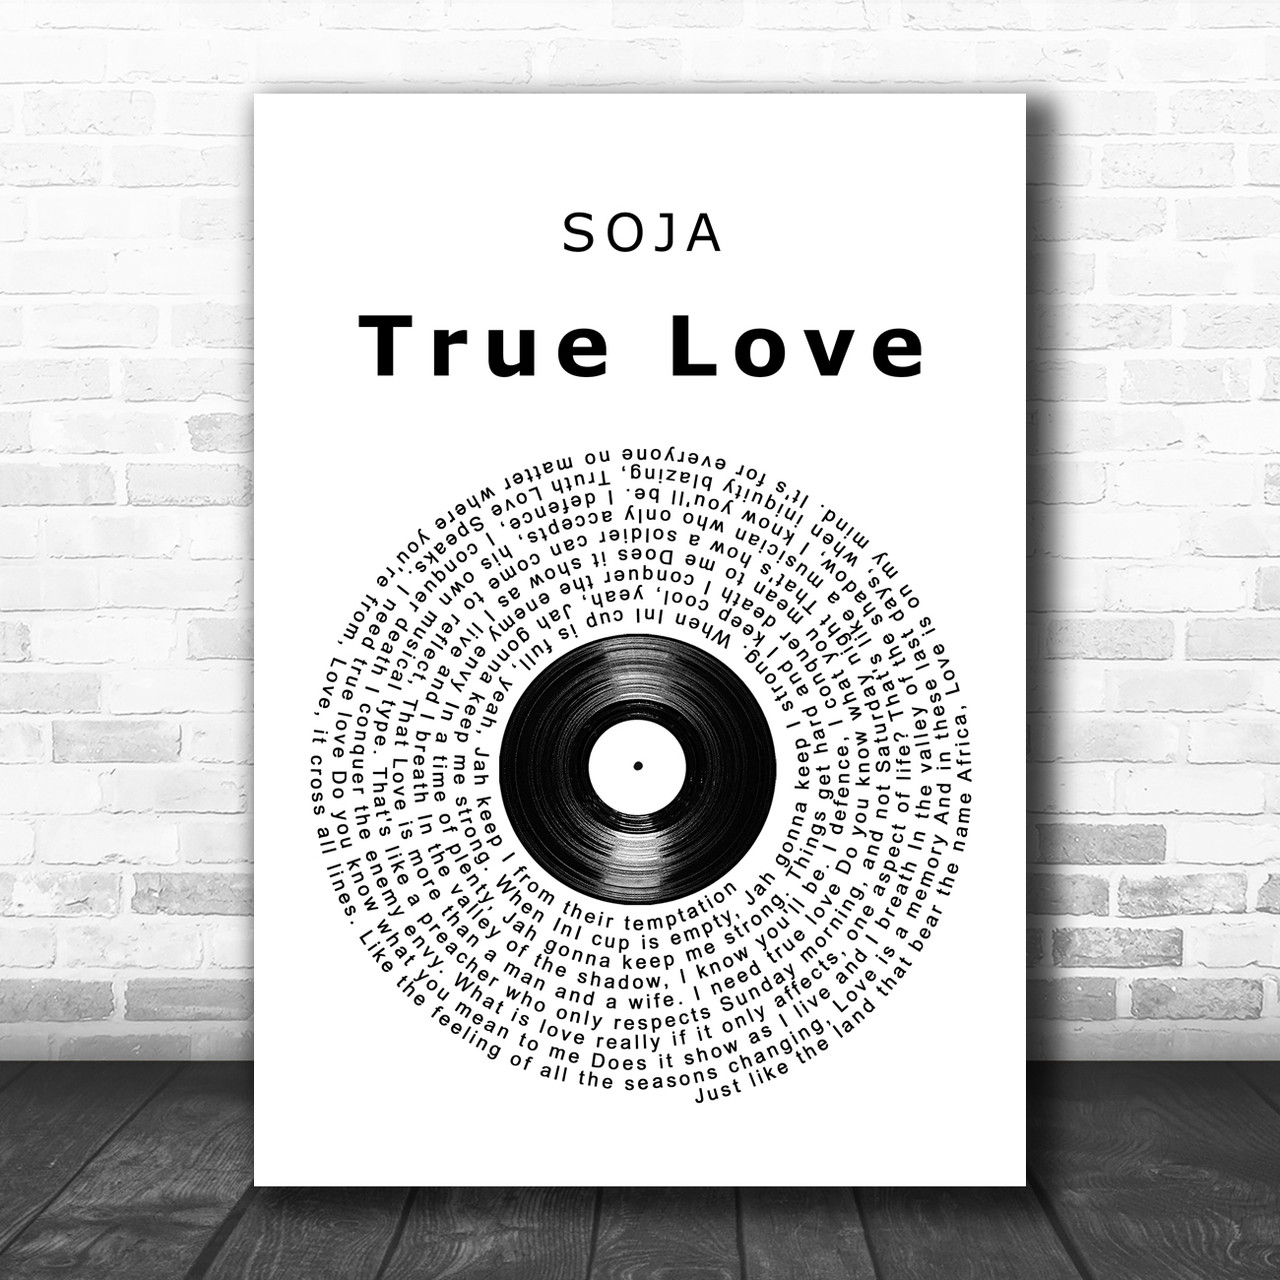 True Love - SOJA